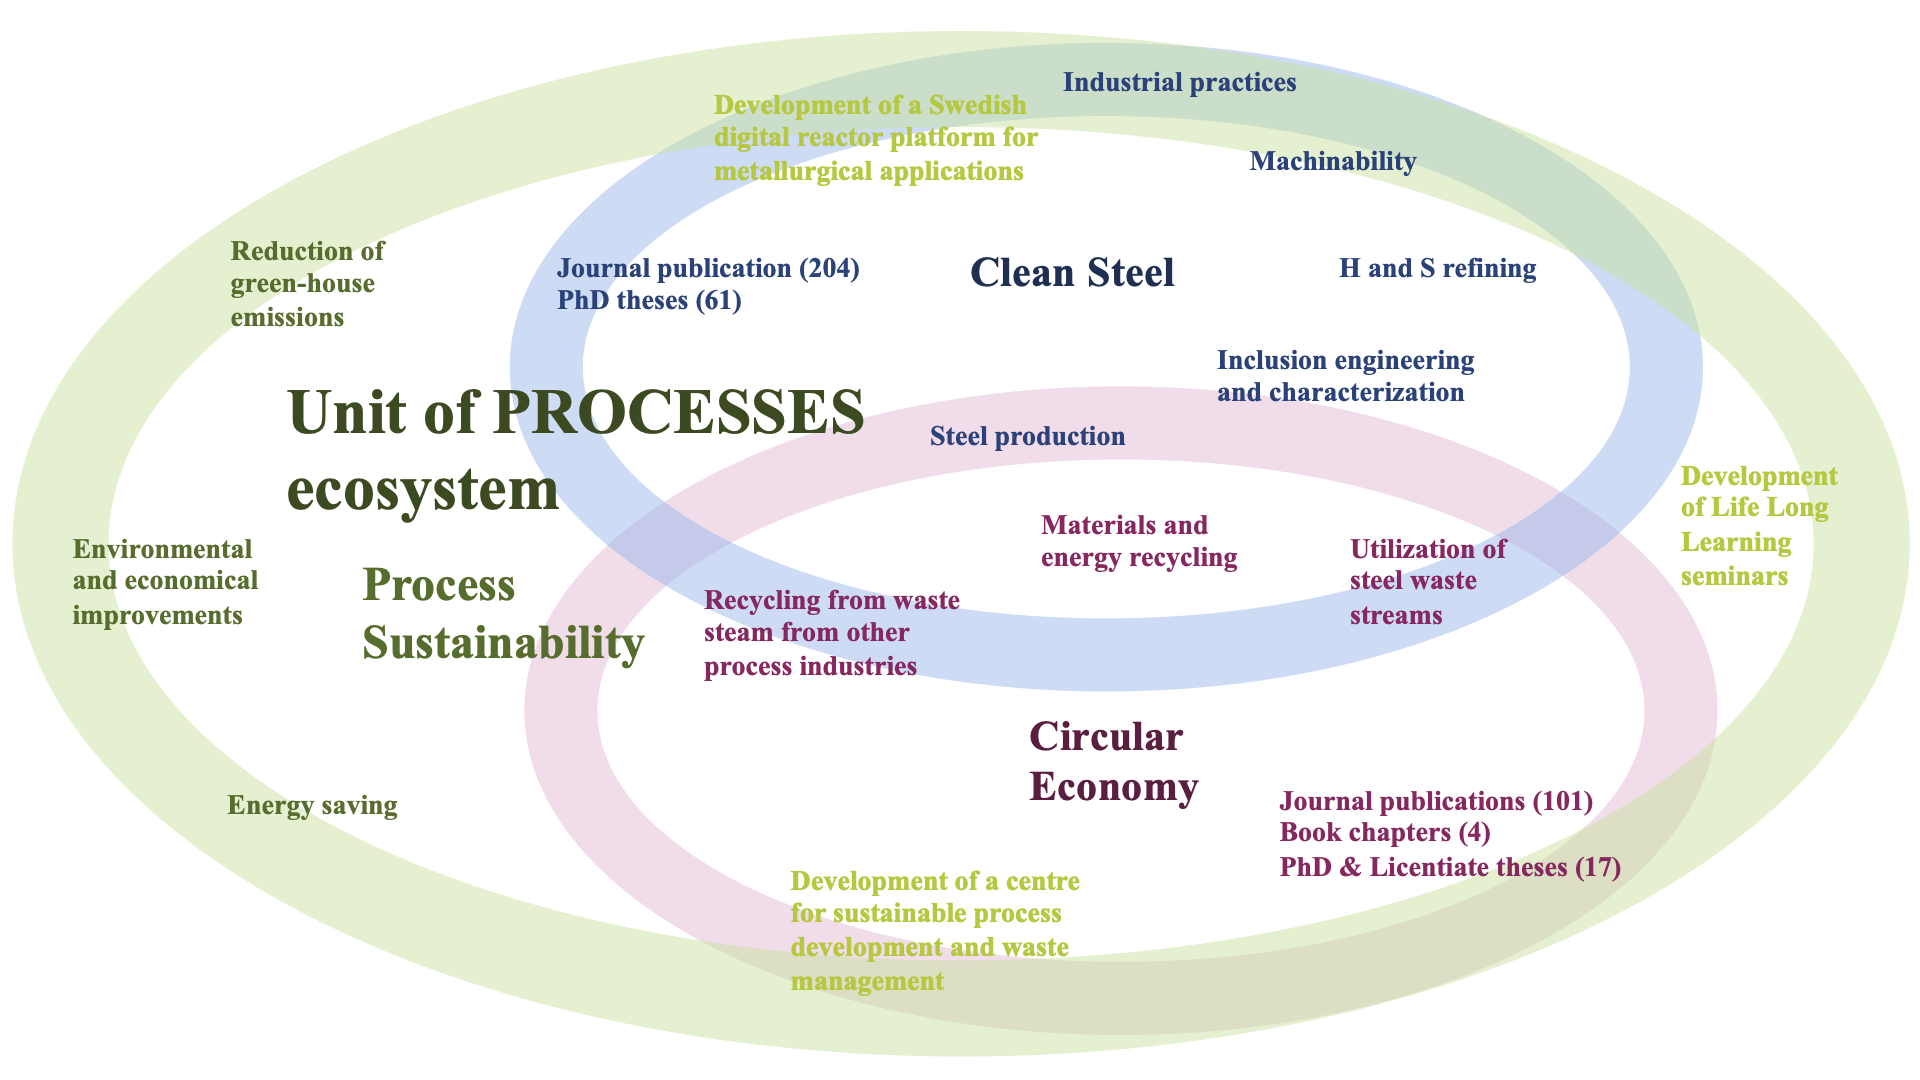 Unit of Processes ecosystem